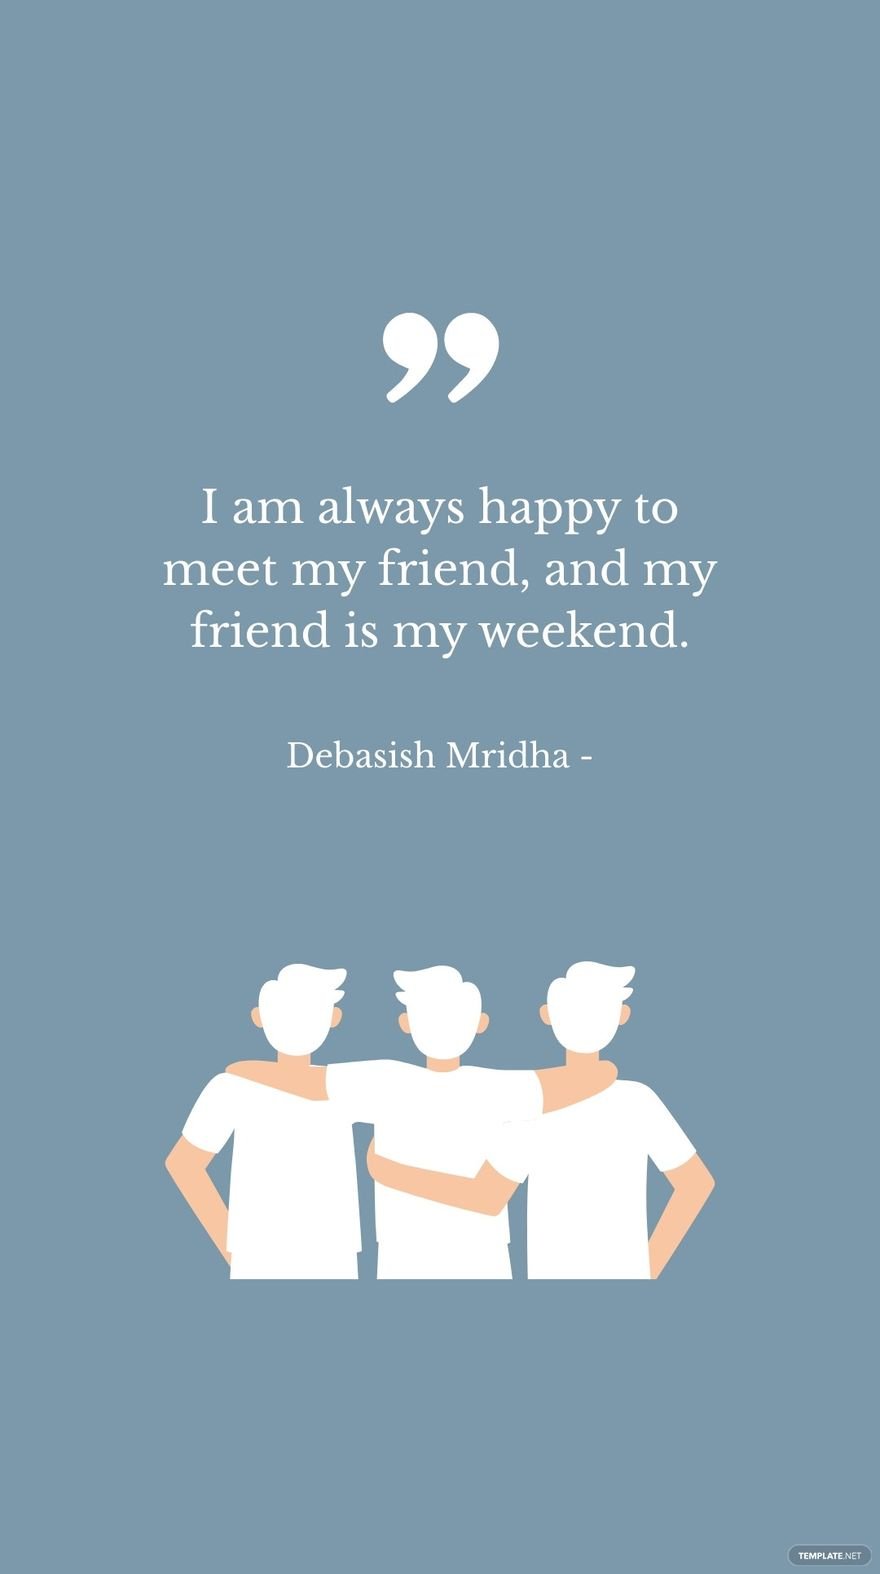 Debasish Mridha - I am always happy to meet my friend, and my friend is my weekend.